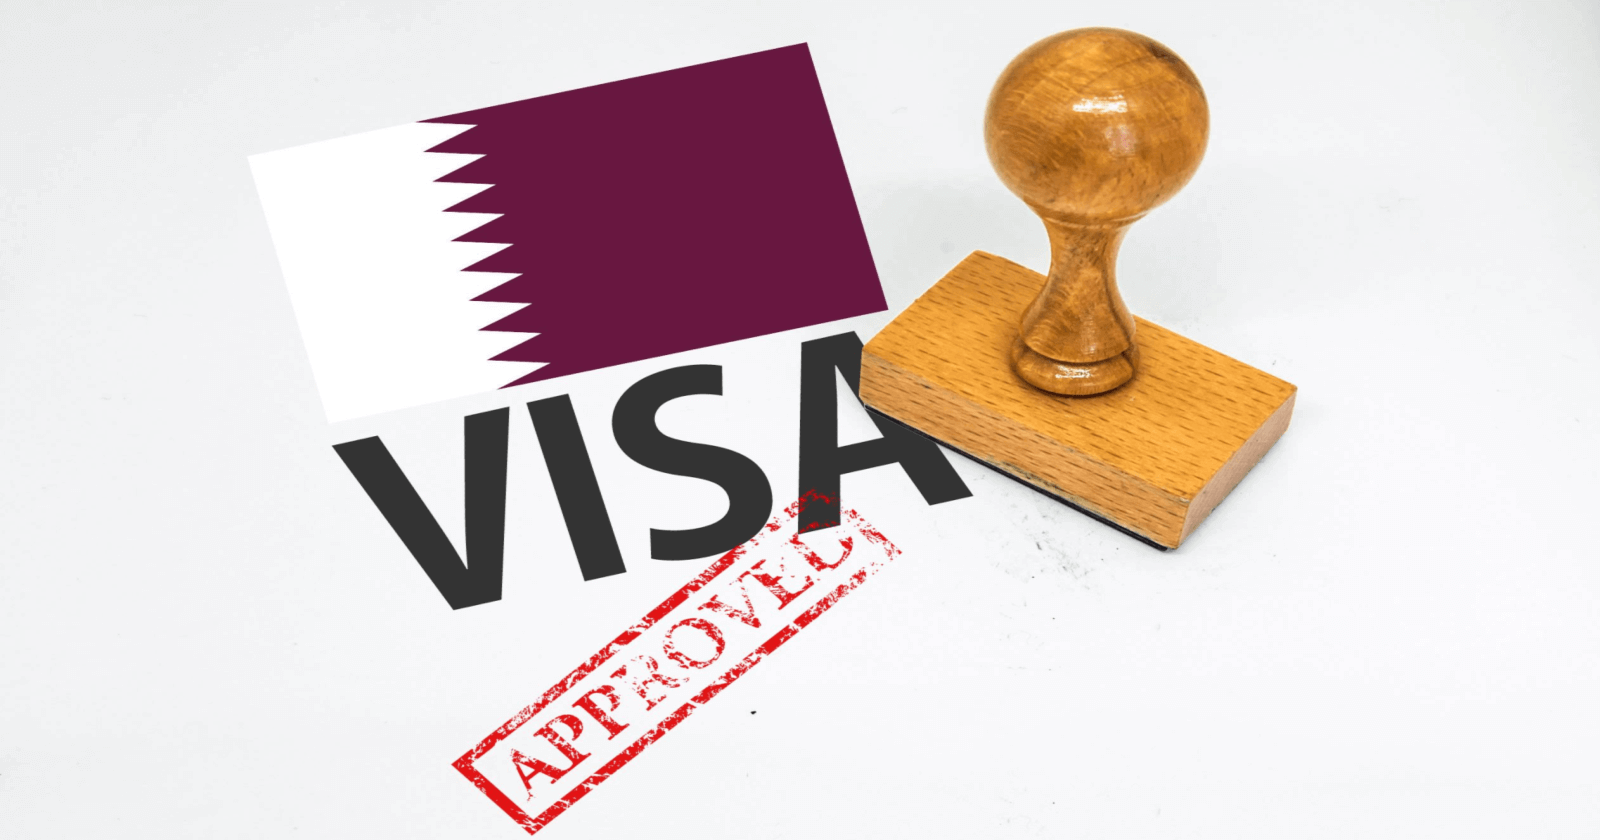 How to check Qatar visa status in India